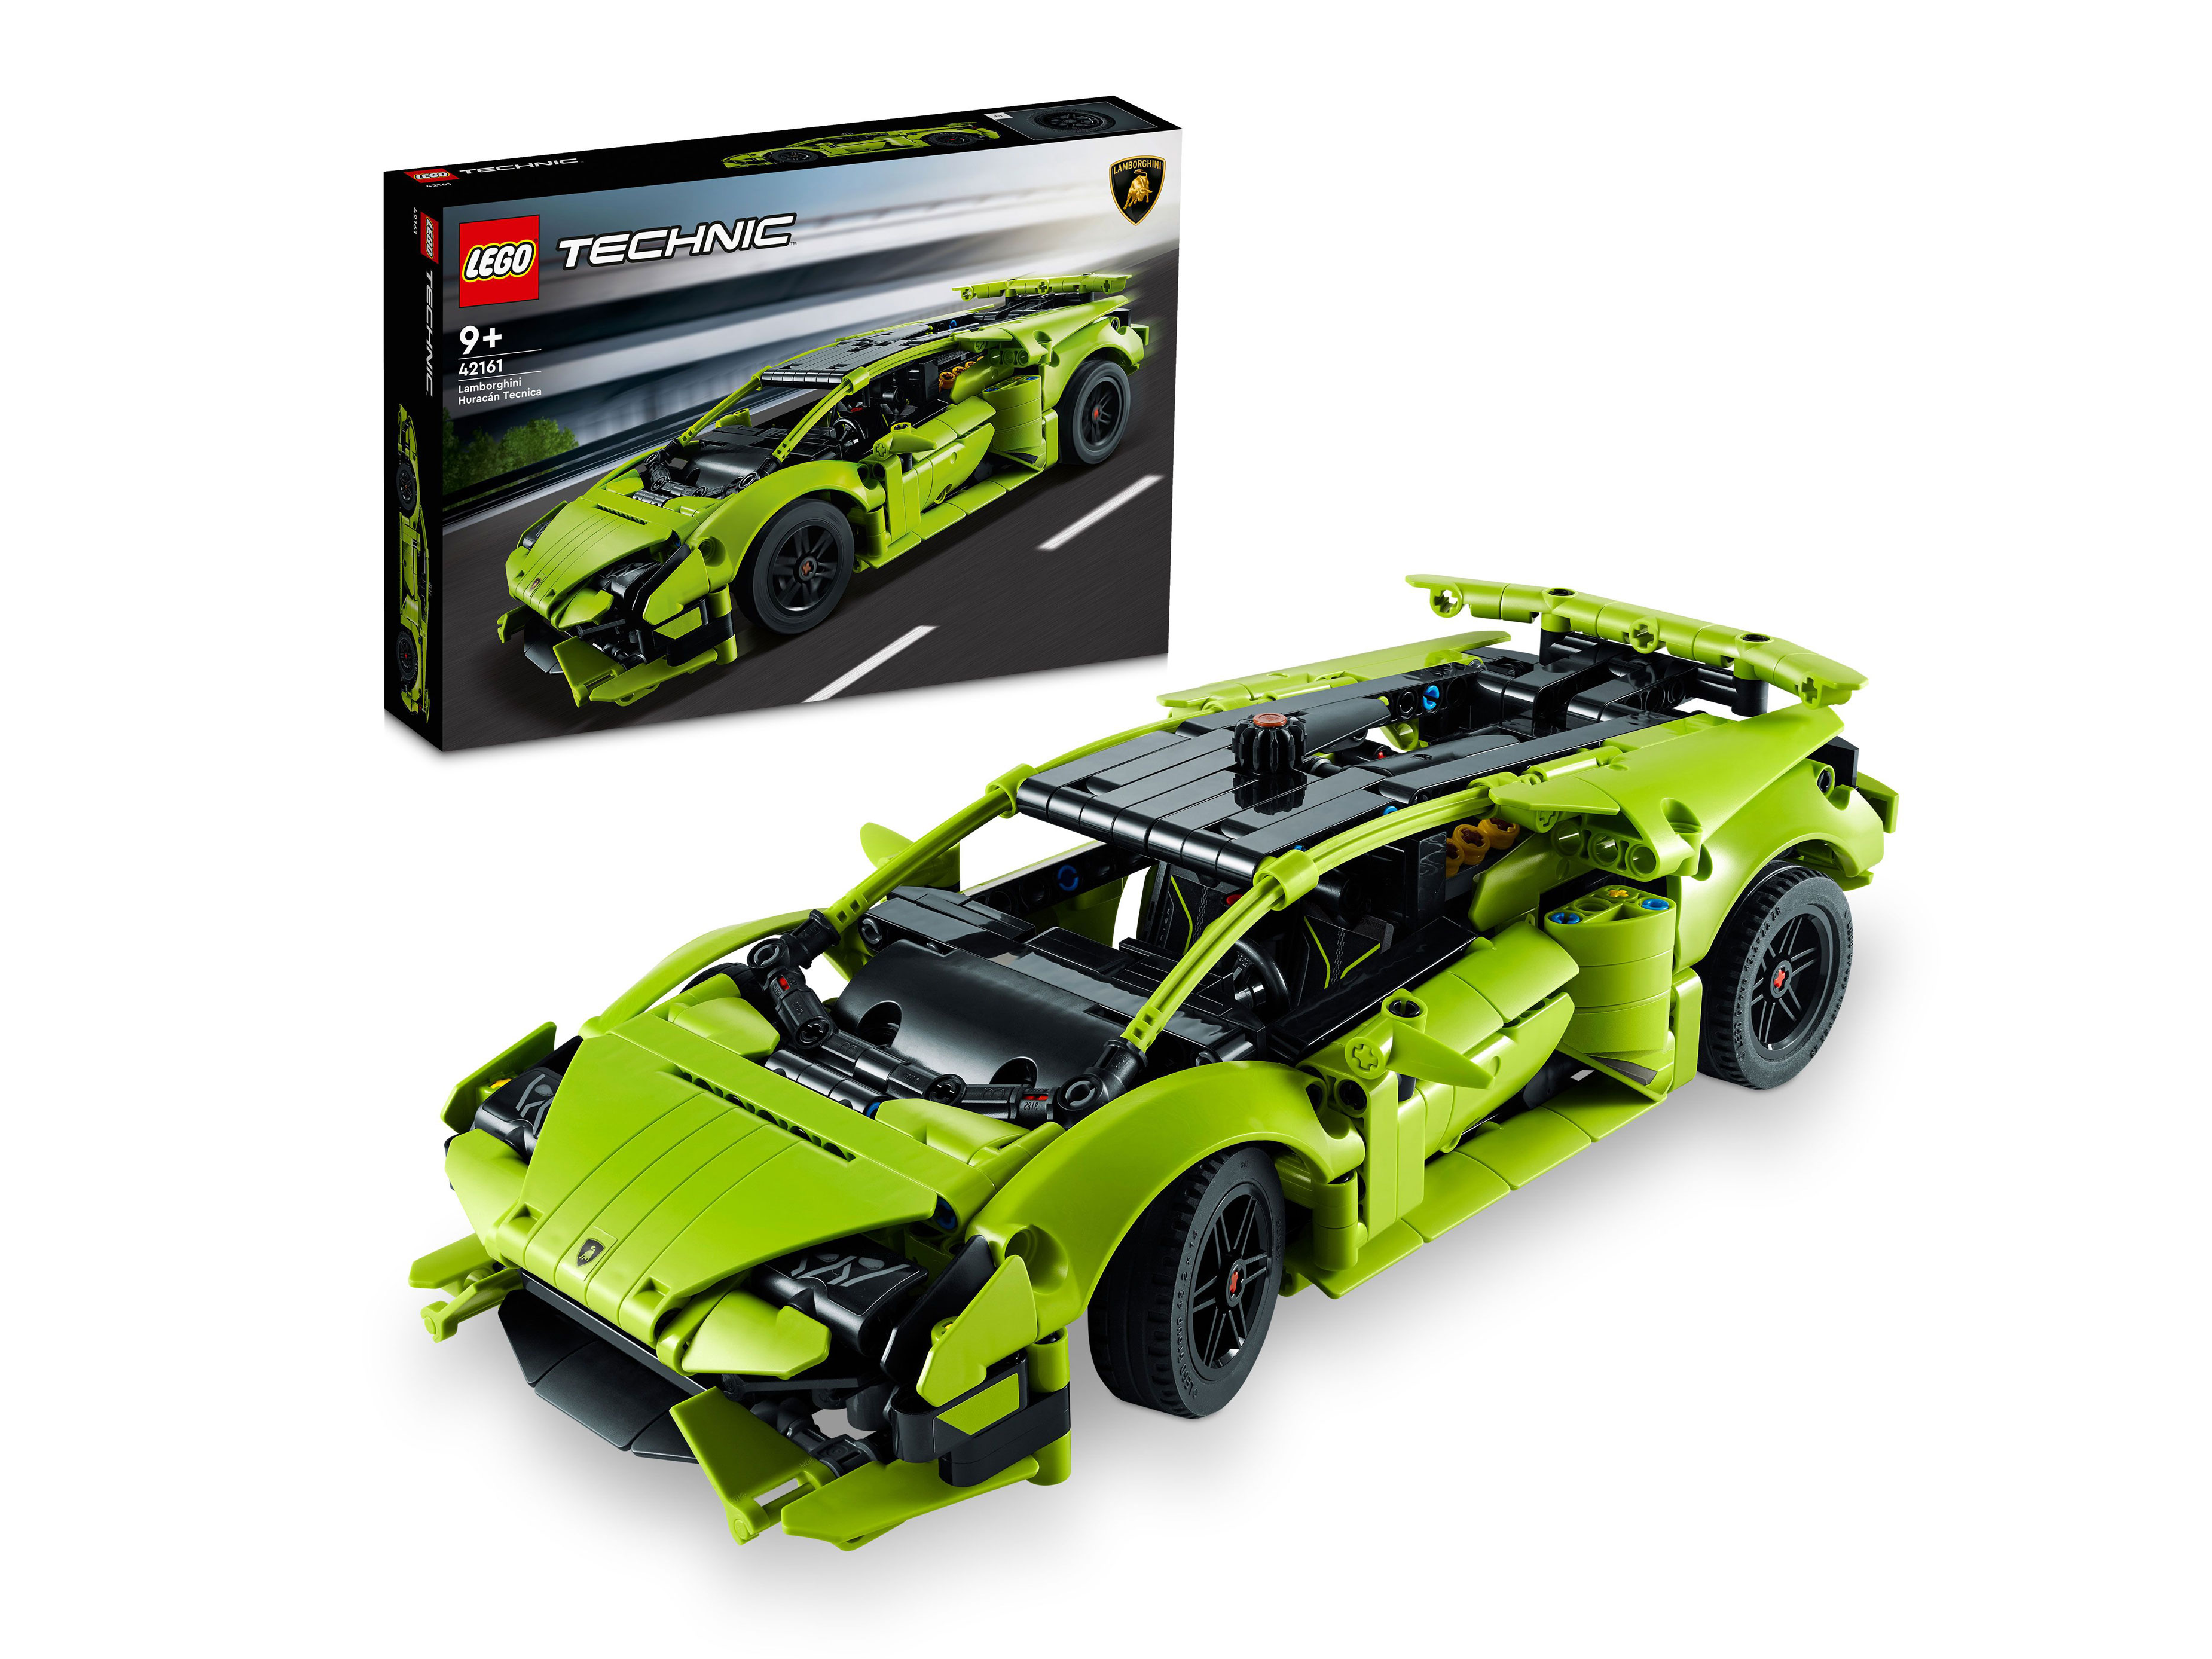  LEGO Technic Lamborghini Sián FKP 37 42115 Building